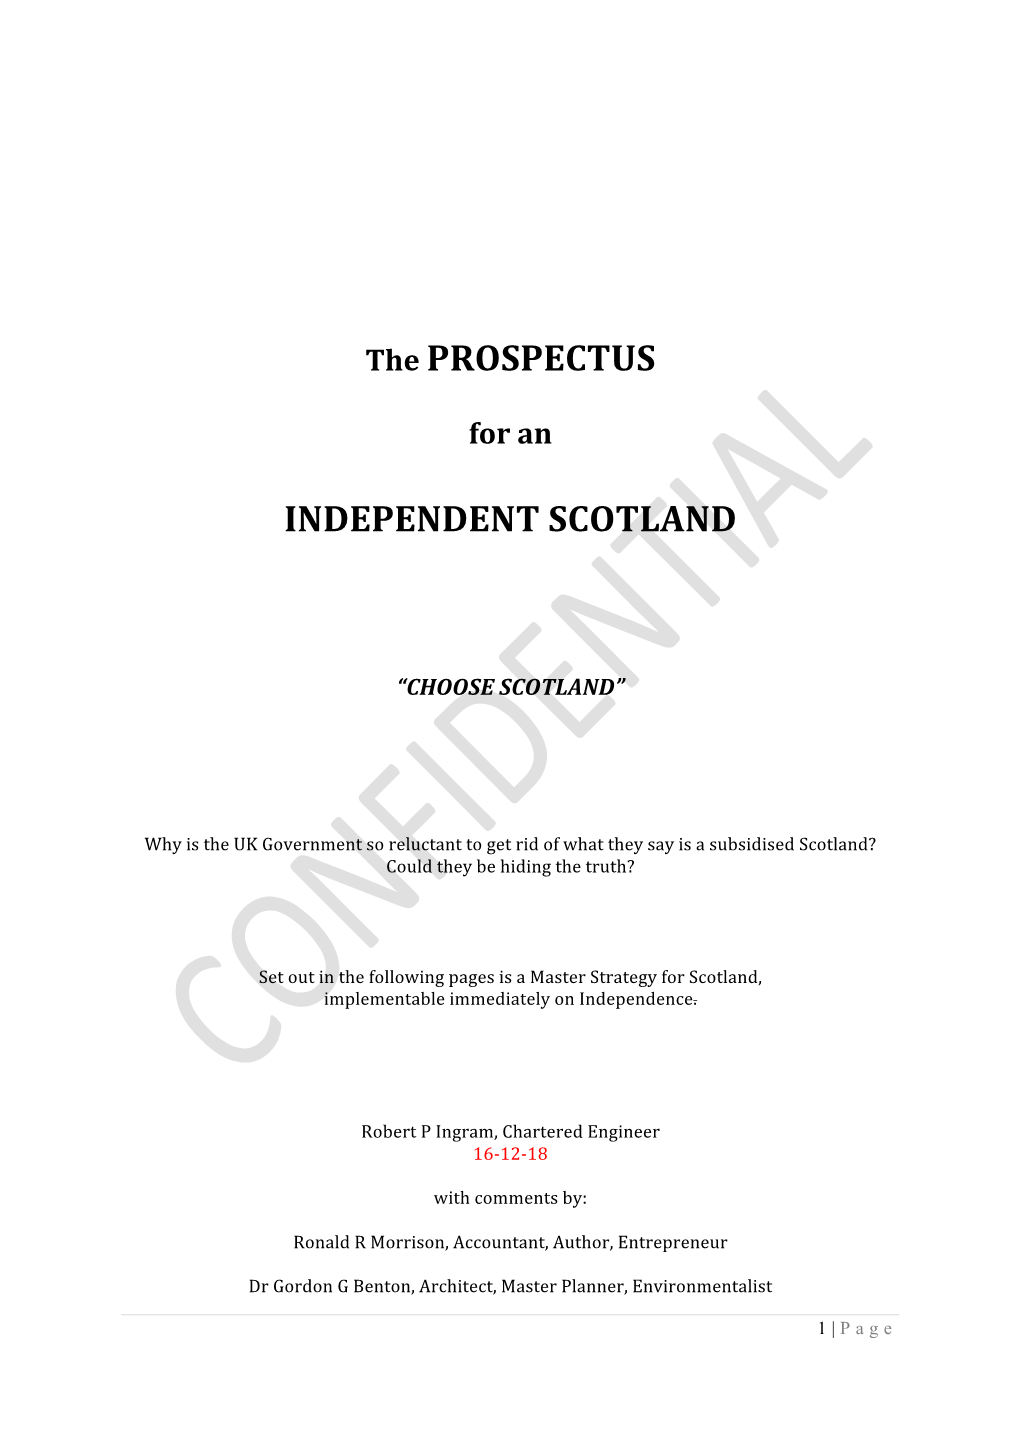 The PROSPECTUS INDEPENDENT SCOTLAND